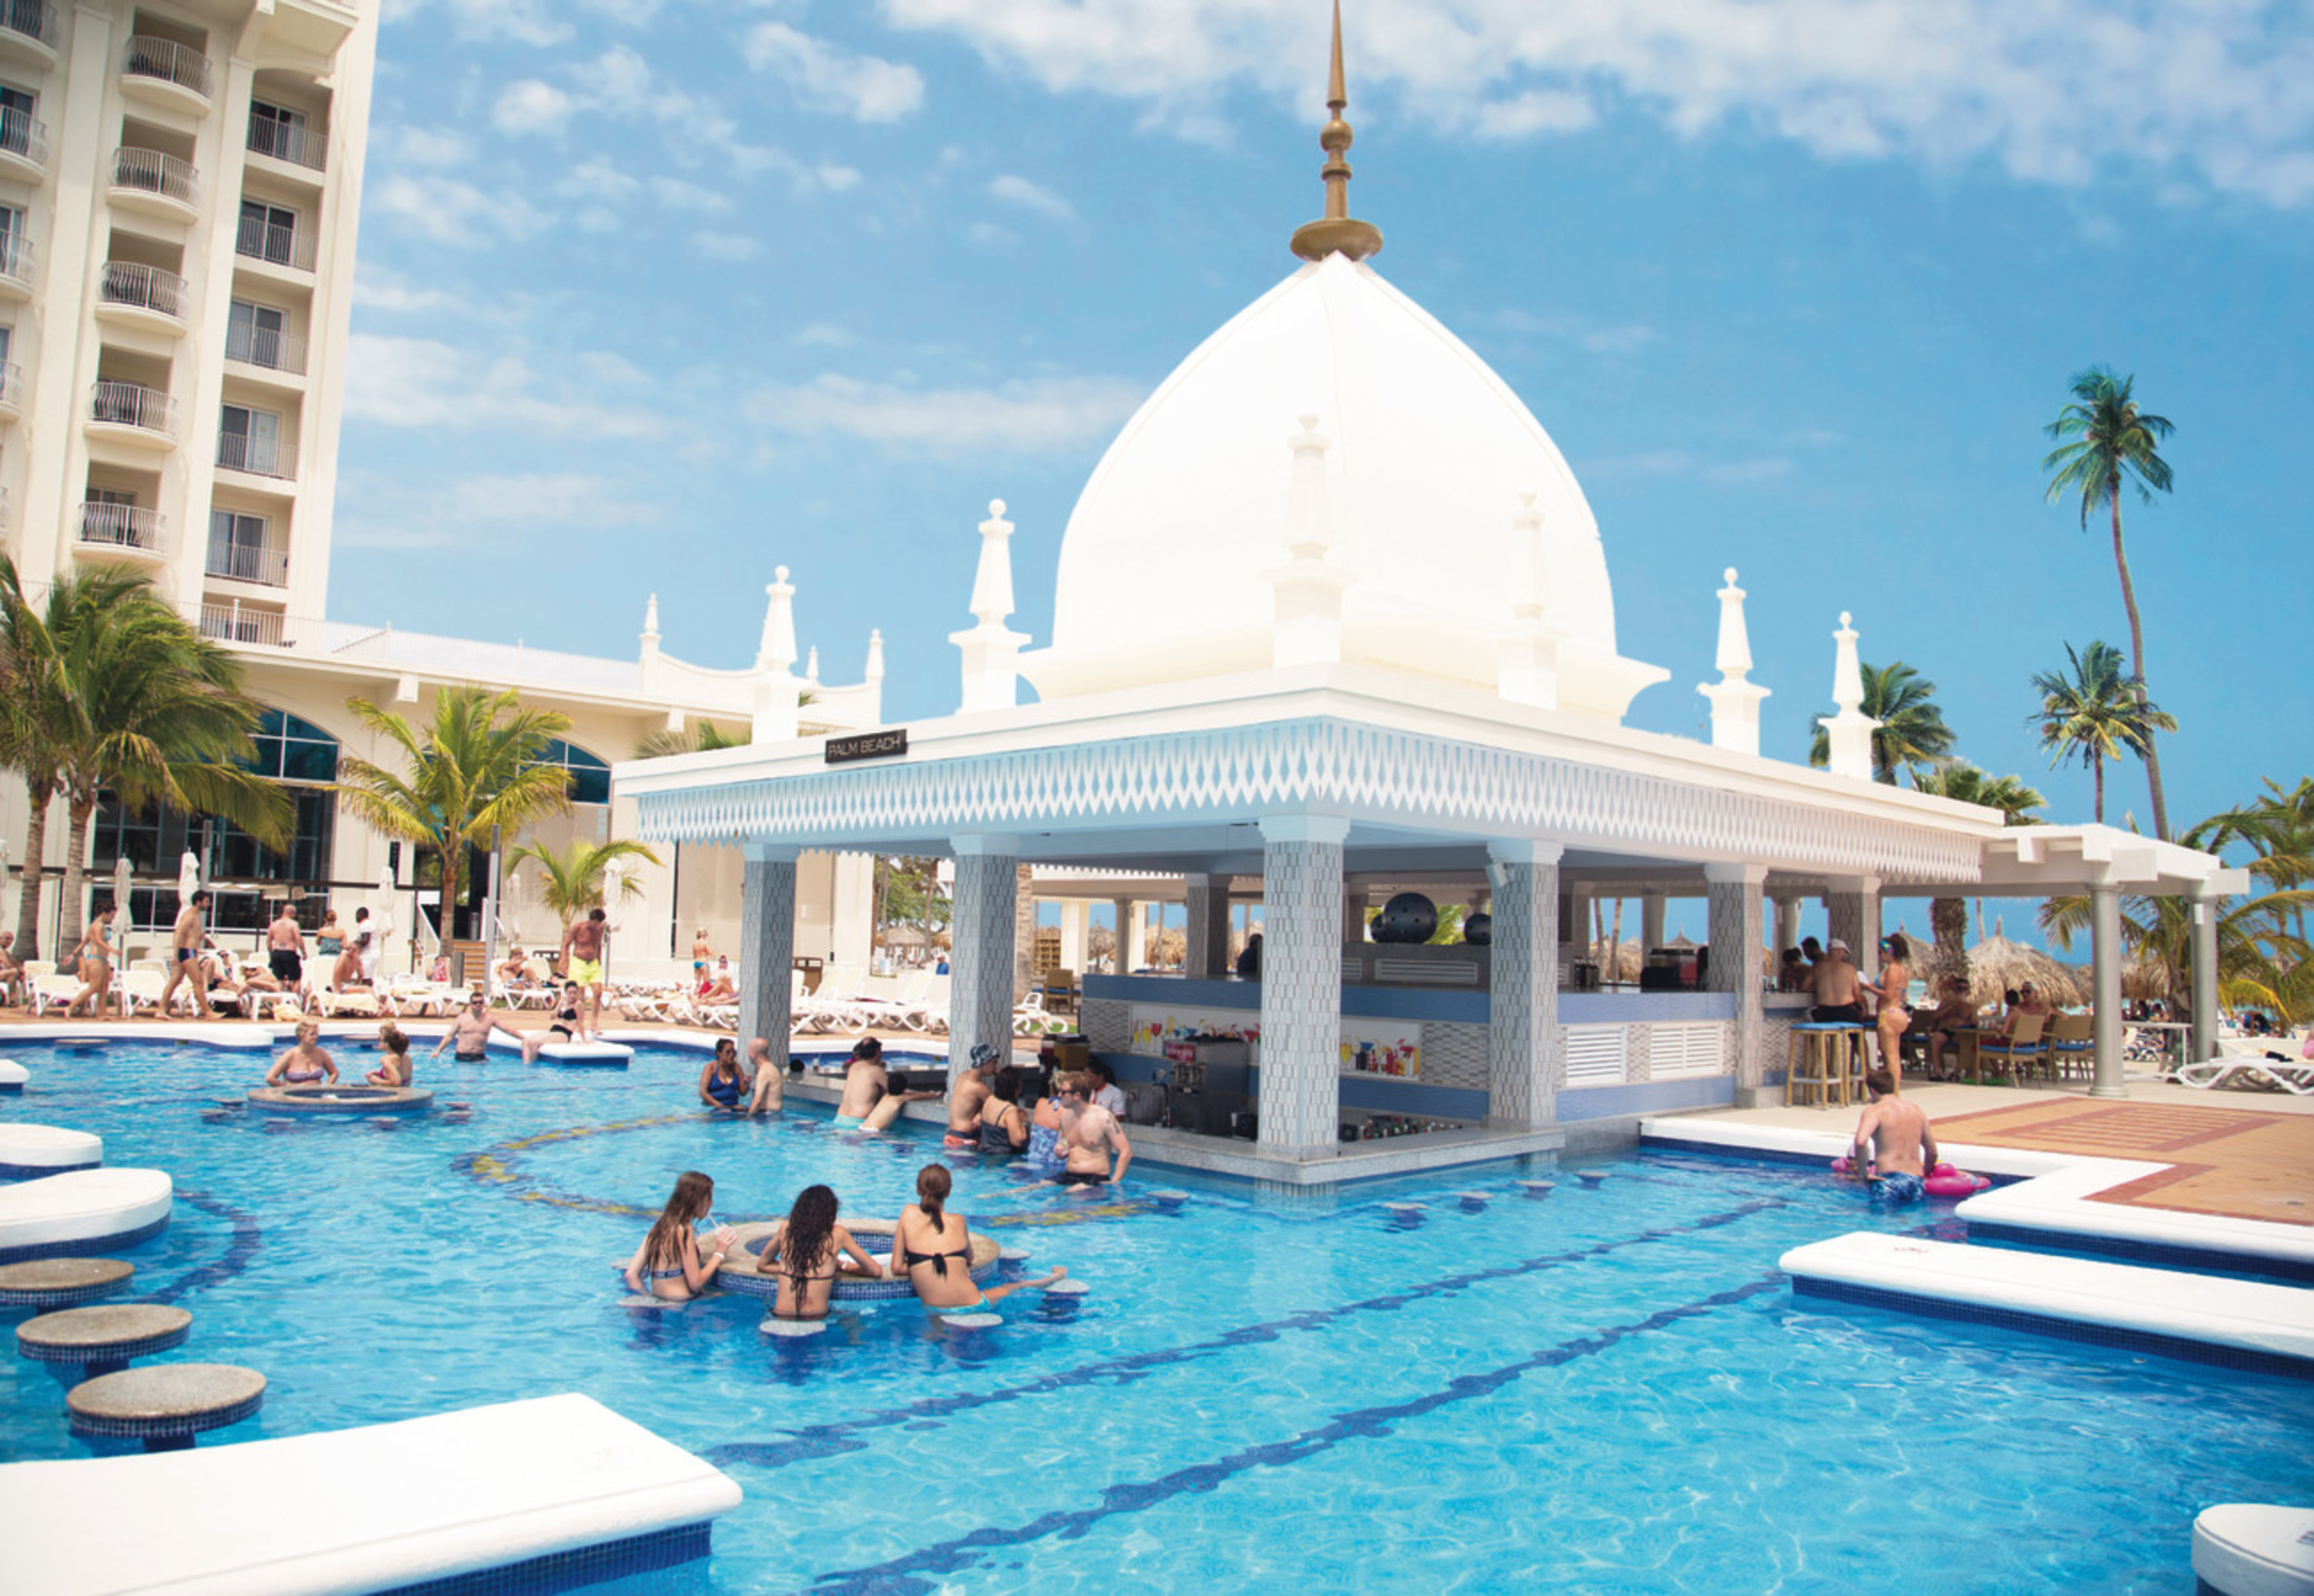 The holiday of your life awaits you at the Hotel Riu Palace Aruba - RIU